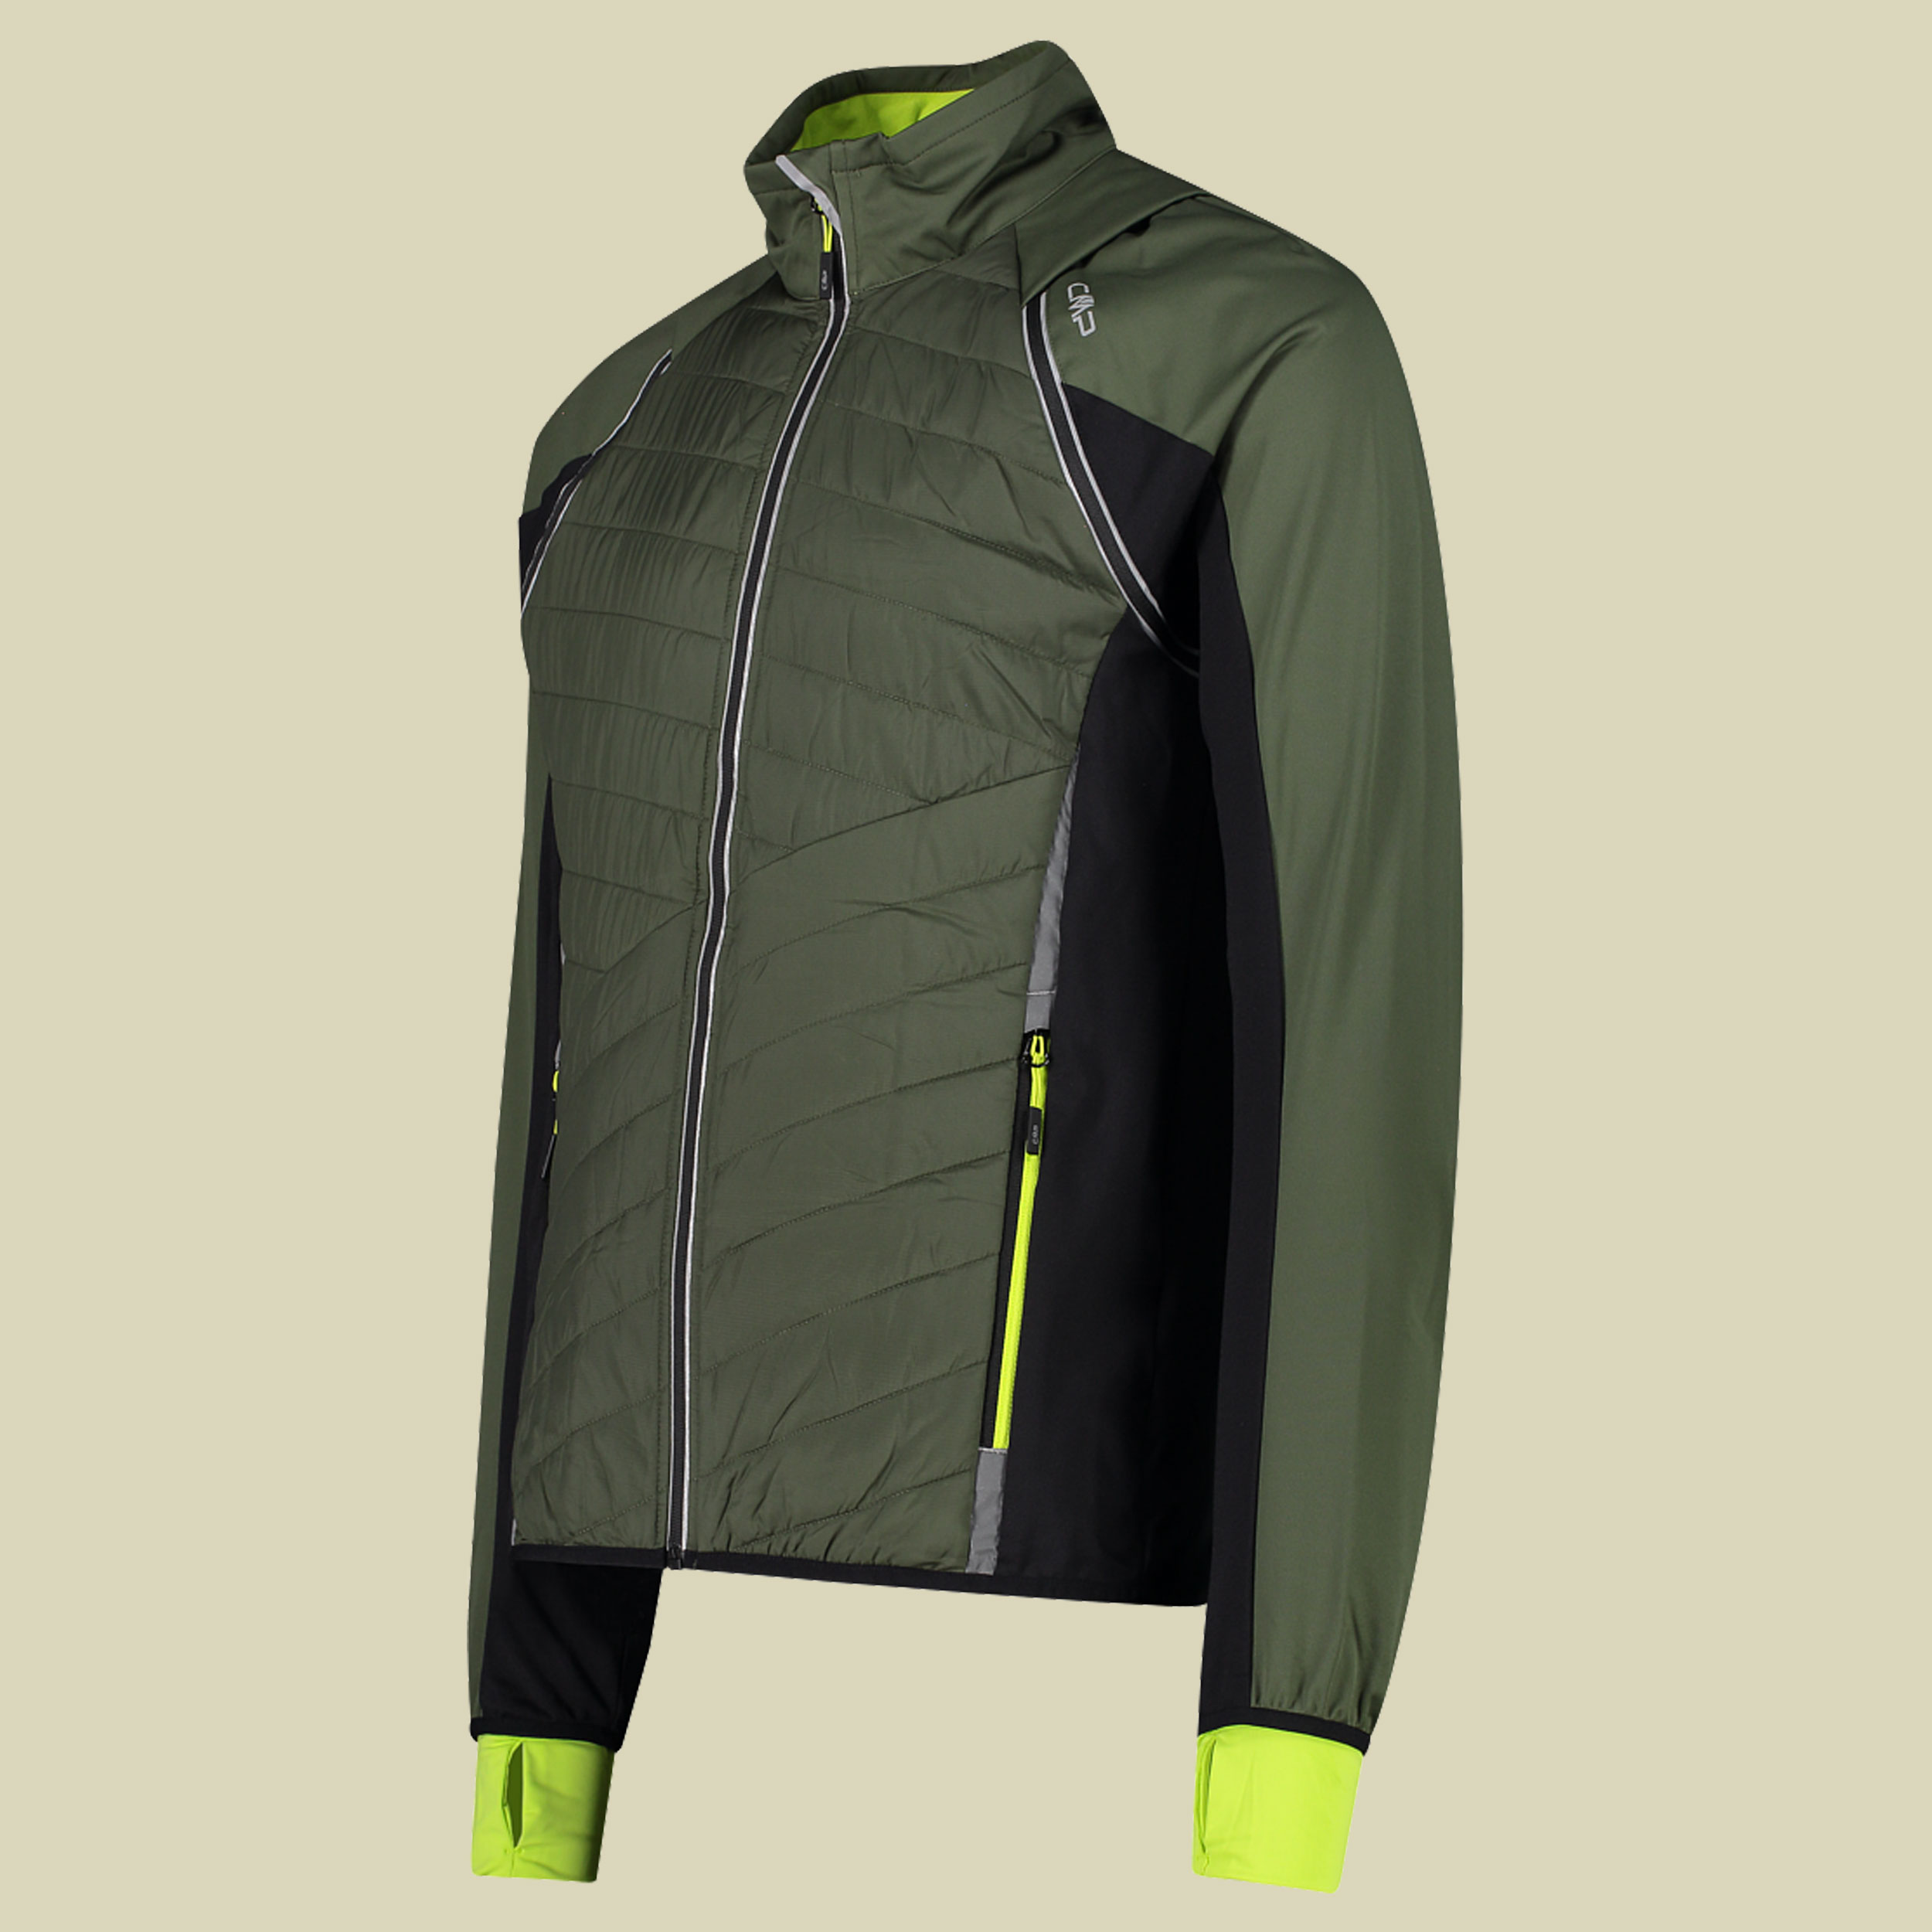 Man Jacket detachable Sleeves 30A2647 Größe 52 Farbe 15EP oil green-nero